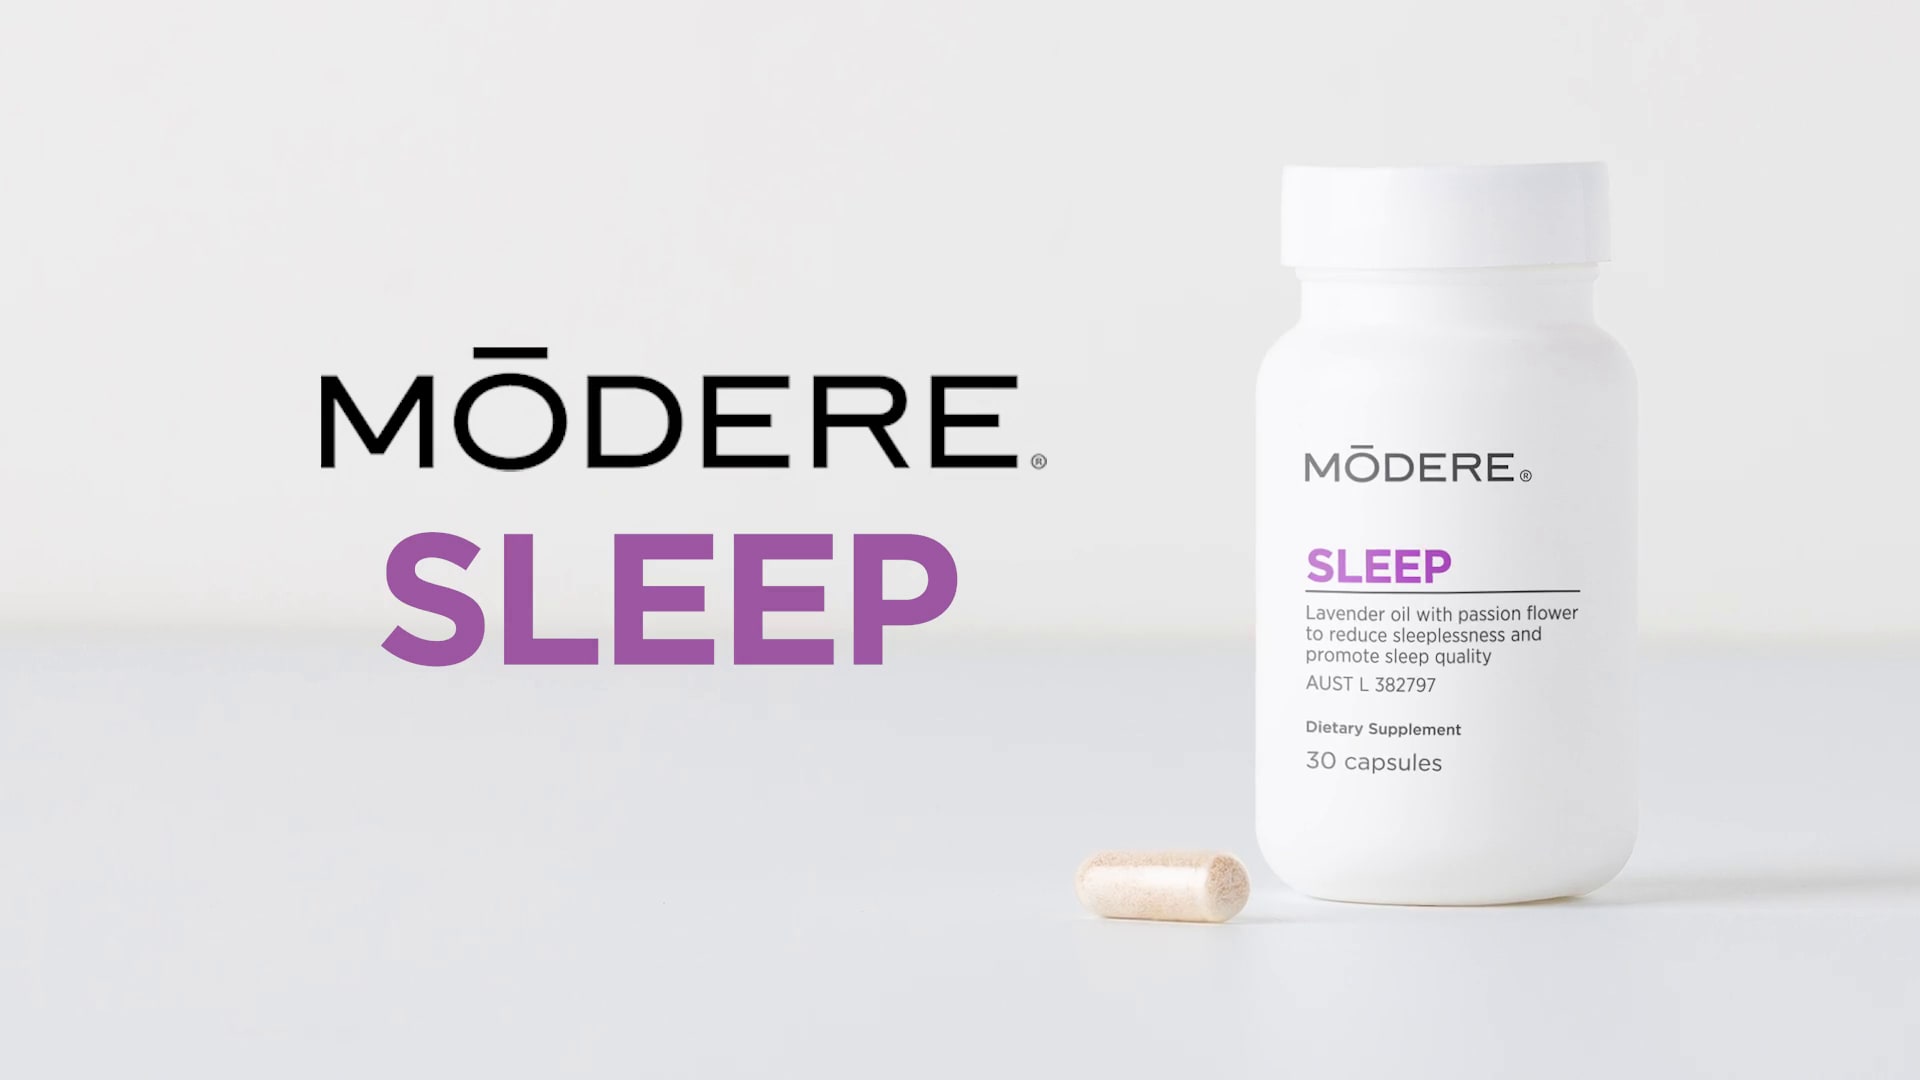 Modere® Sleep featured Image 2